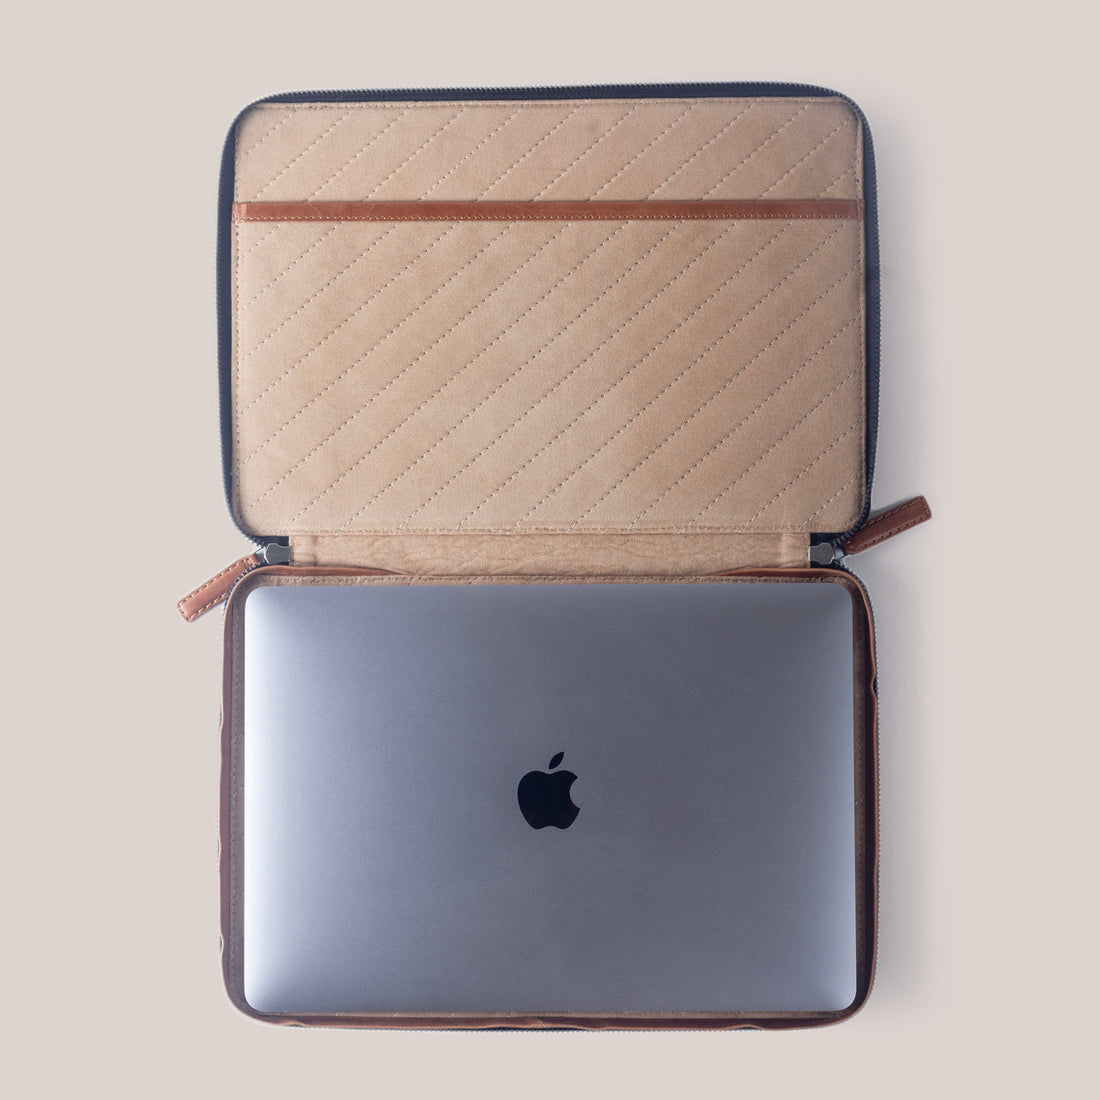 DELL XPS Zippered Laptop Case - Vintage Tan